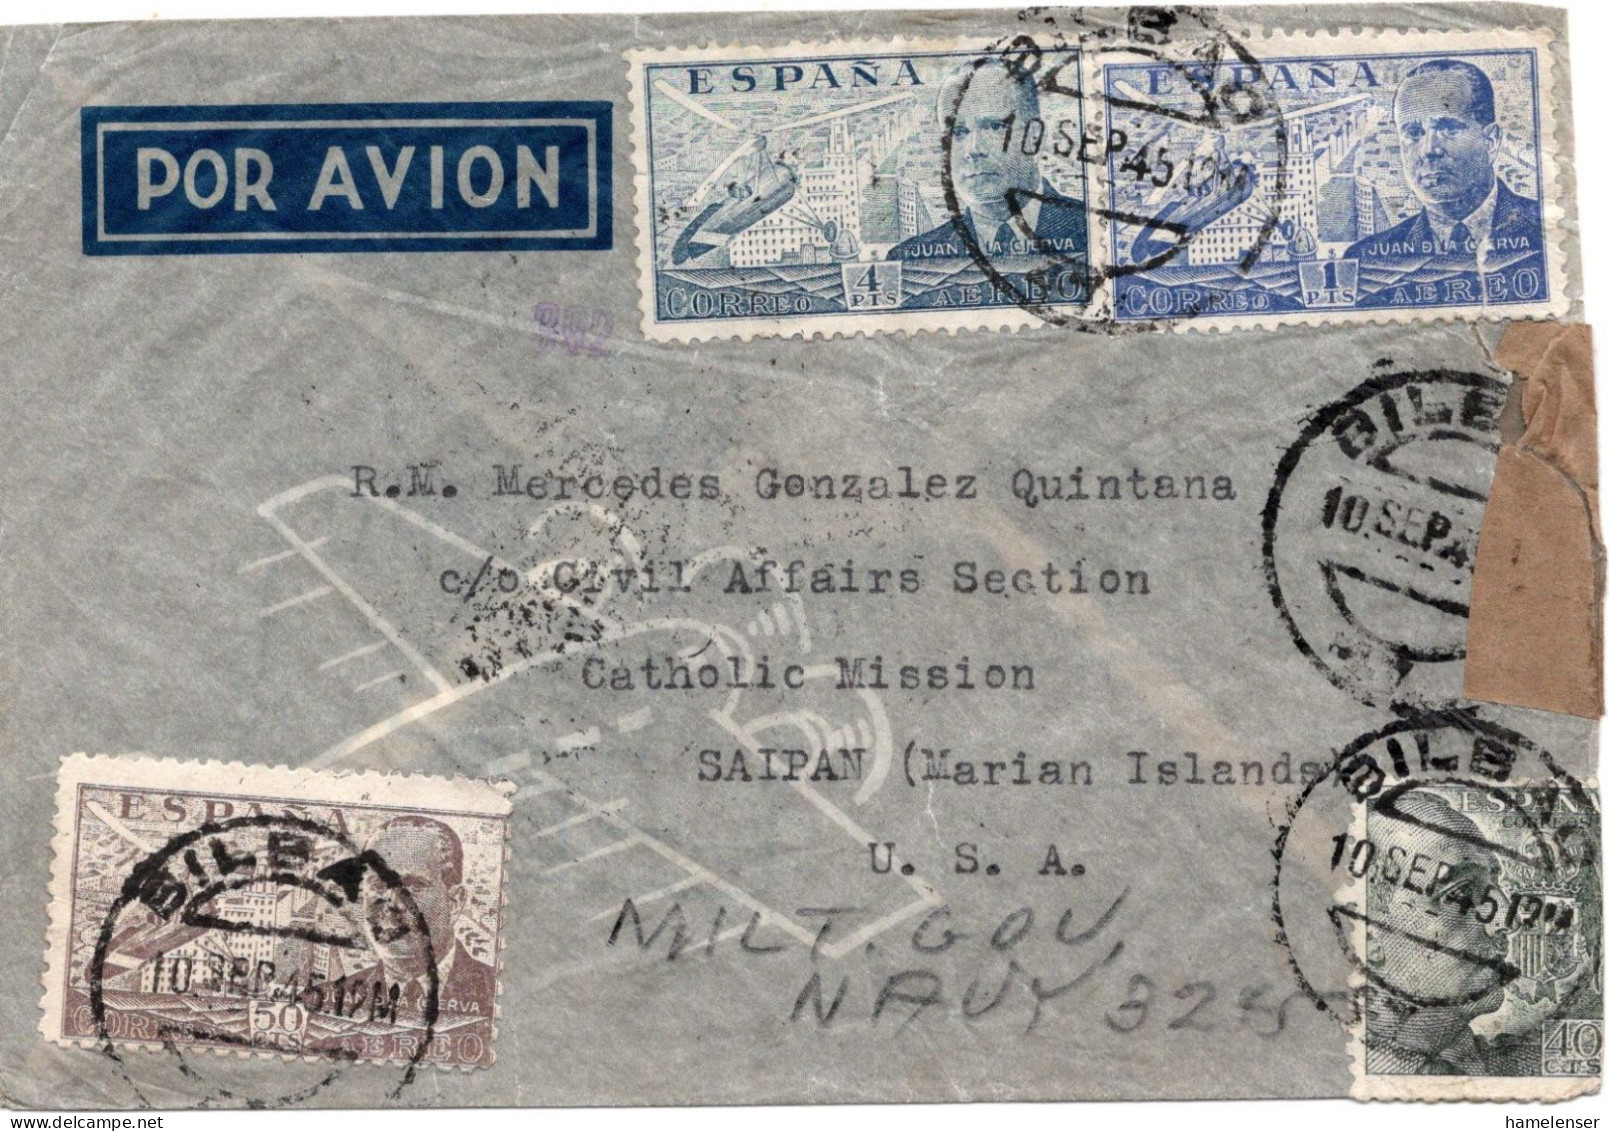 71633 - Spanien - 1945 - 4Ptas Luftpost MiF A LpBf BILBAO -> Saipan, M Span Zensur, Kurz Nach Japan Kapitulation - Storia Postale